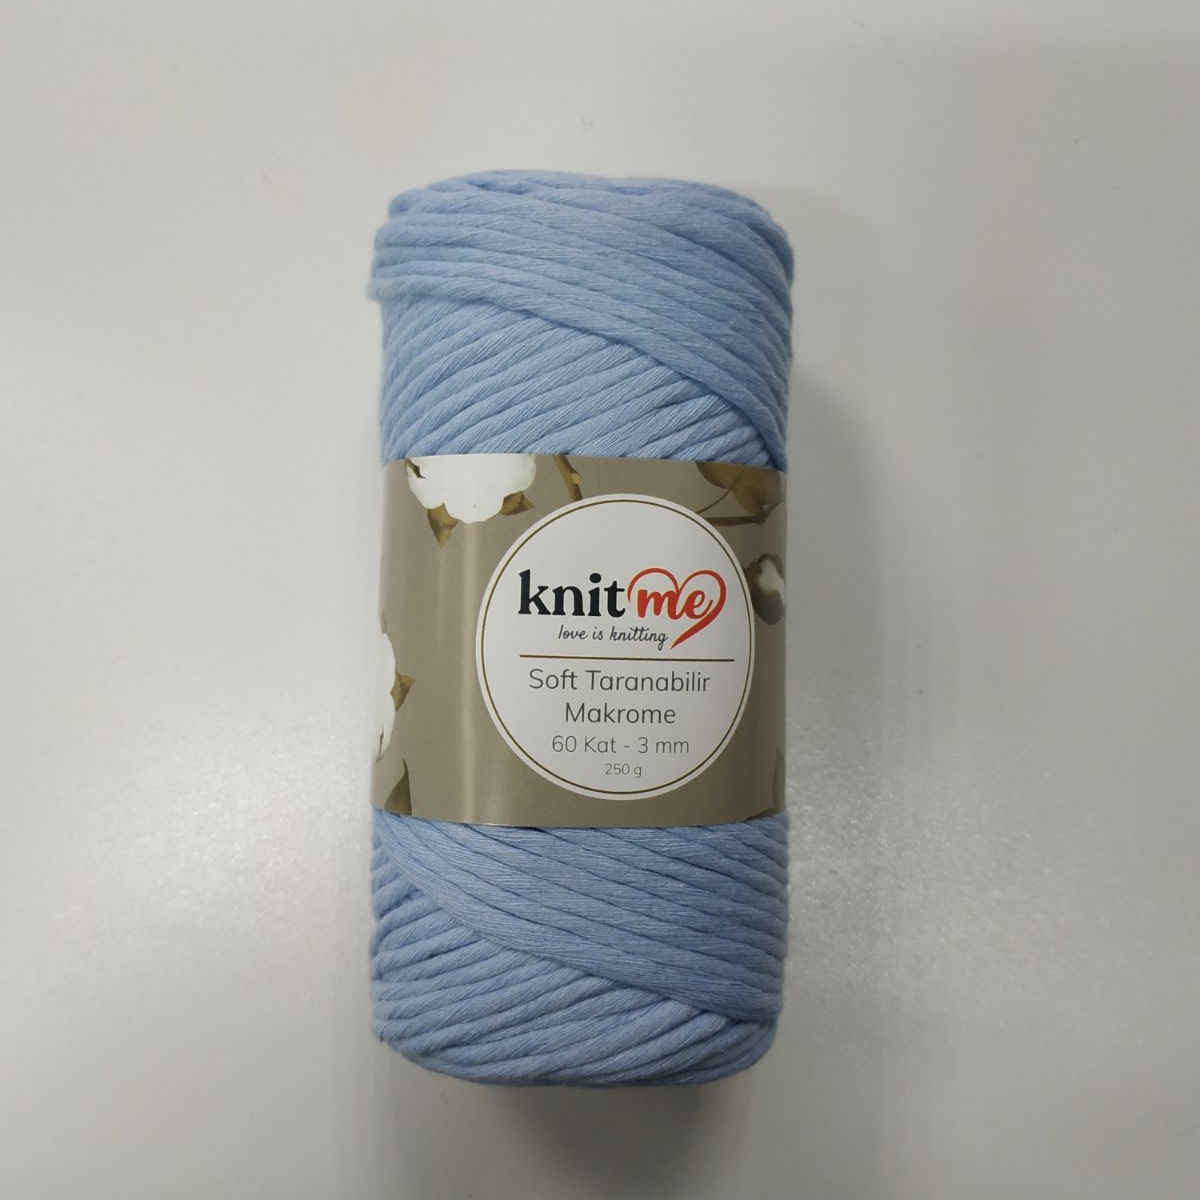 Soft Macrame 3 mm. Knit Me IC9604 - св.голубой